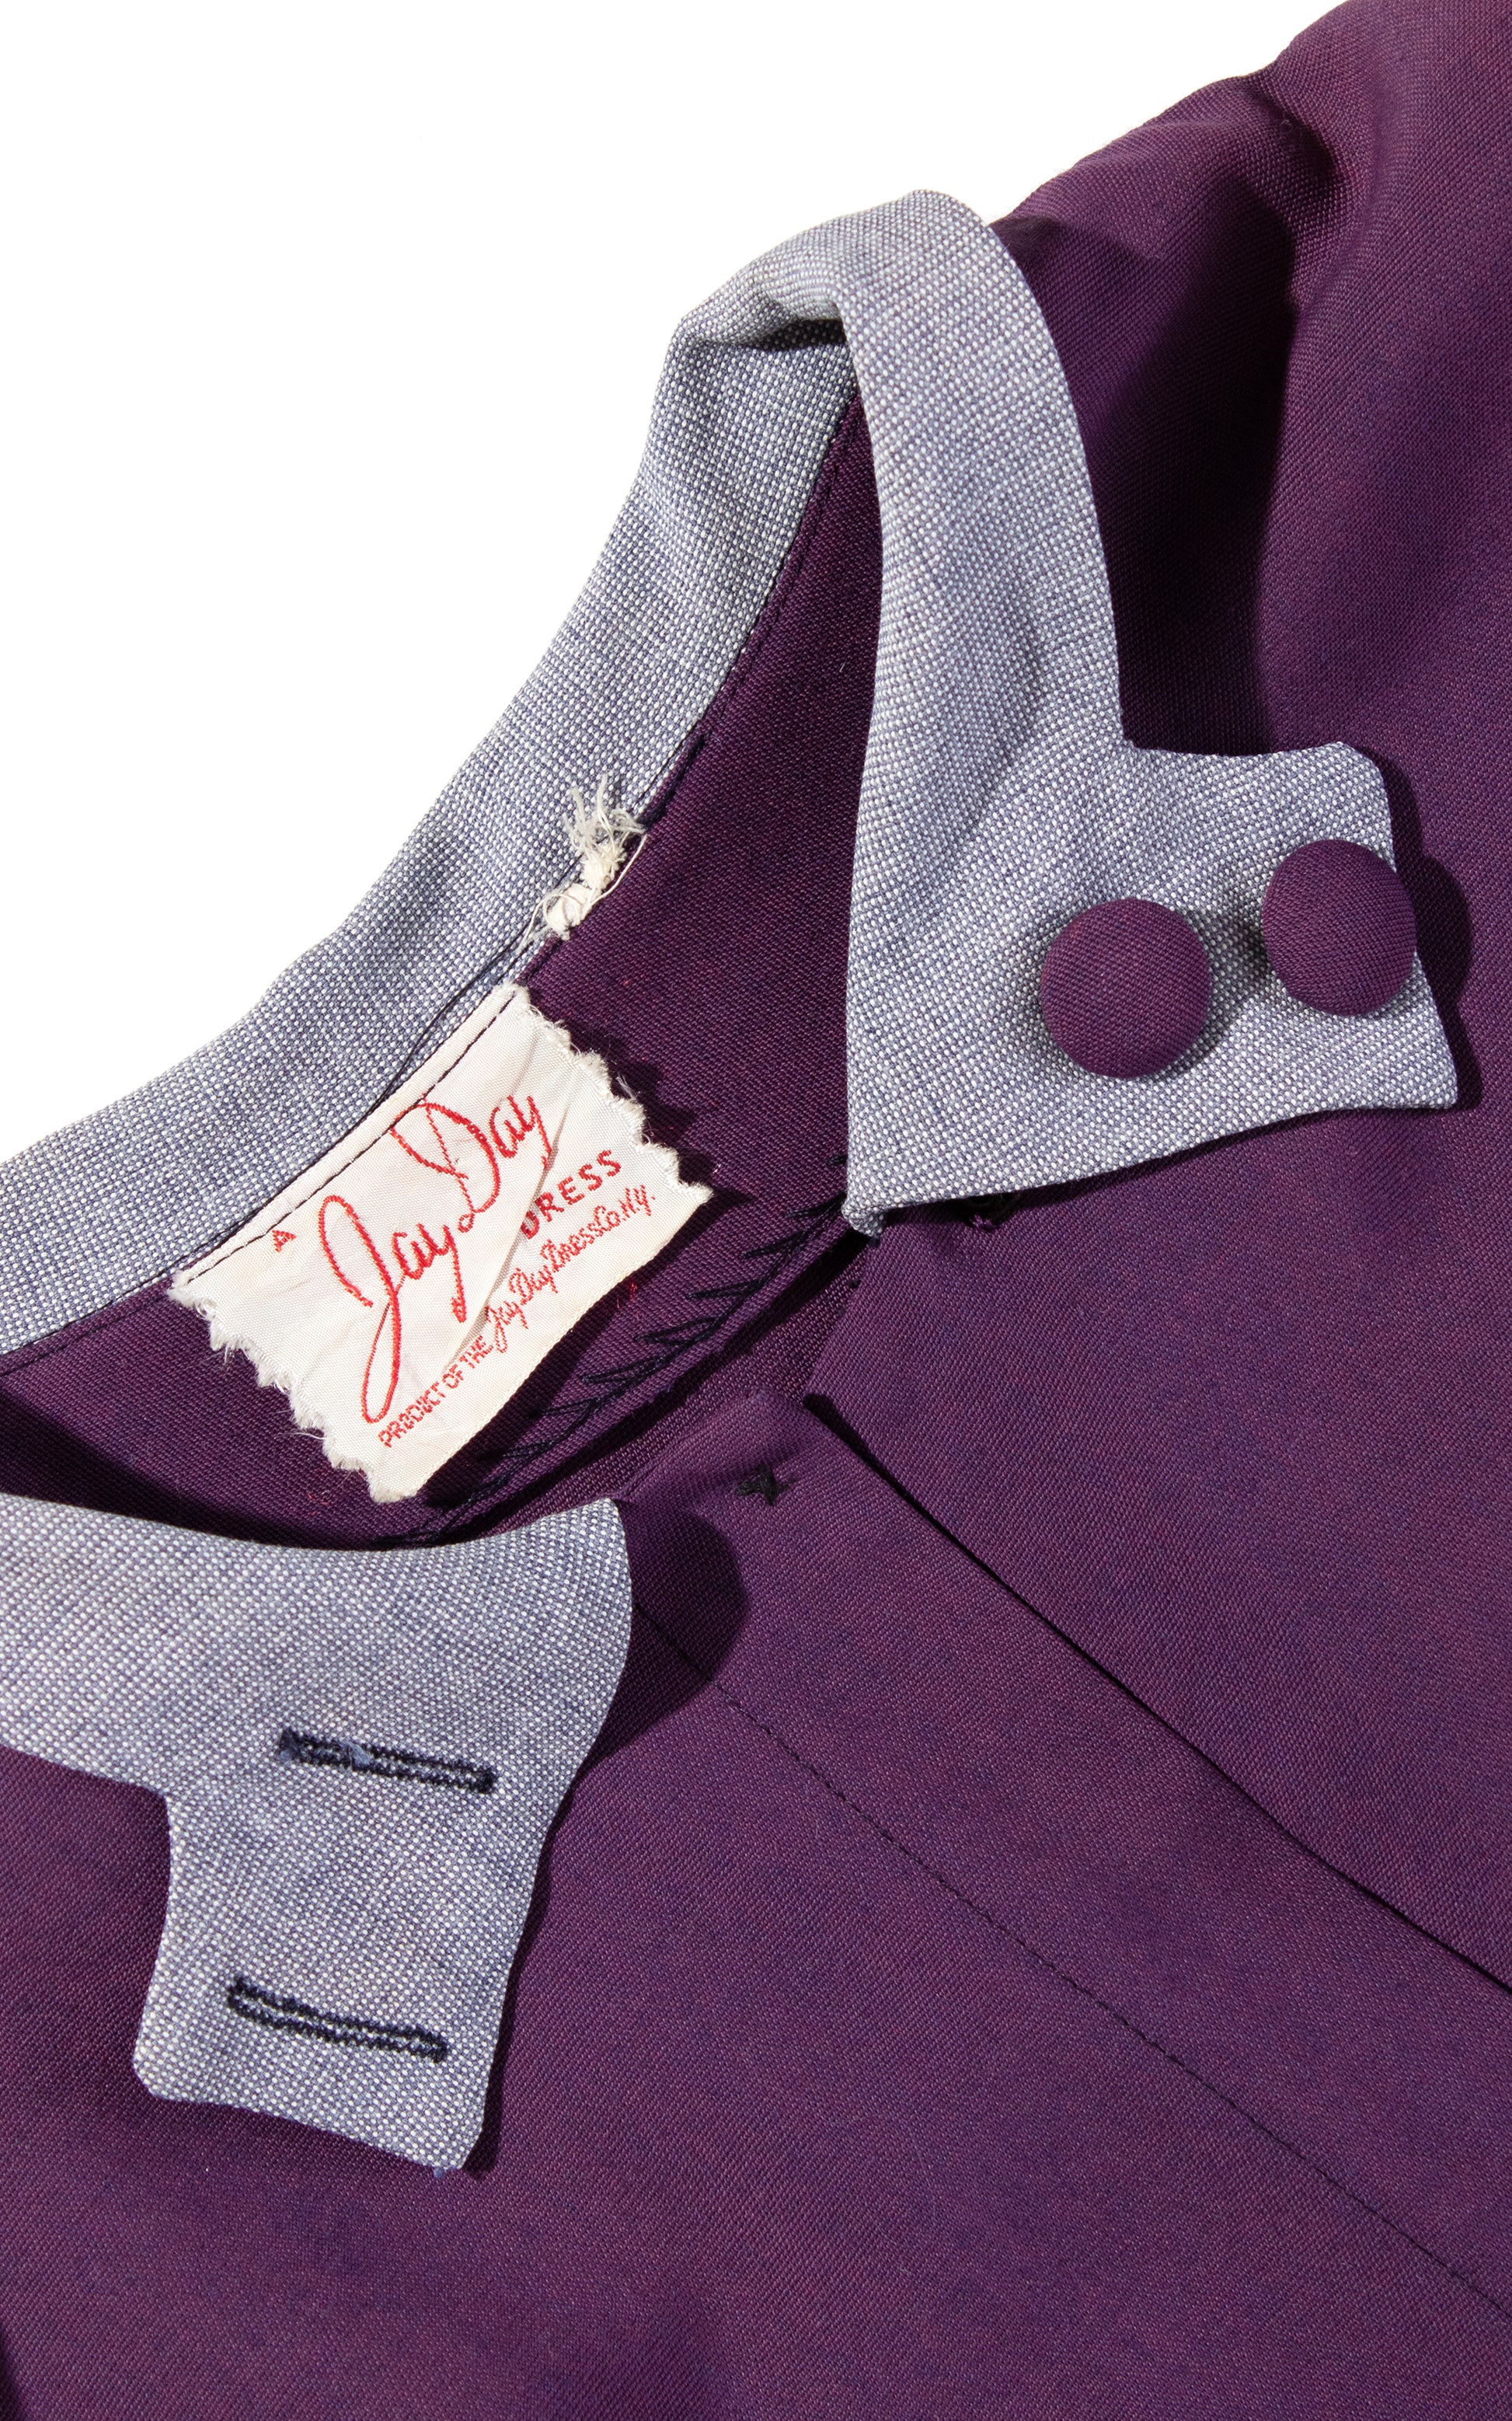 Vintage 40s 1940s Purple Shirtwaist Day Dress with Pockets BirthdayLifeVintage